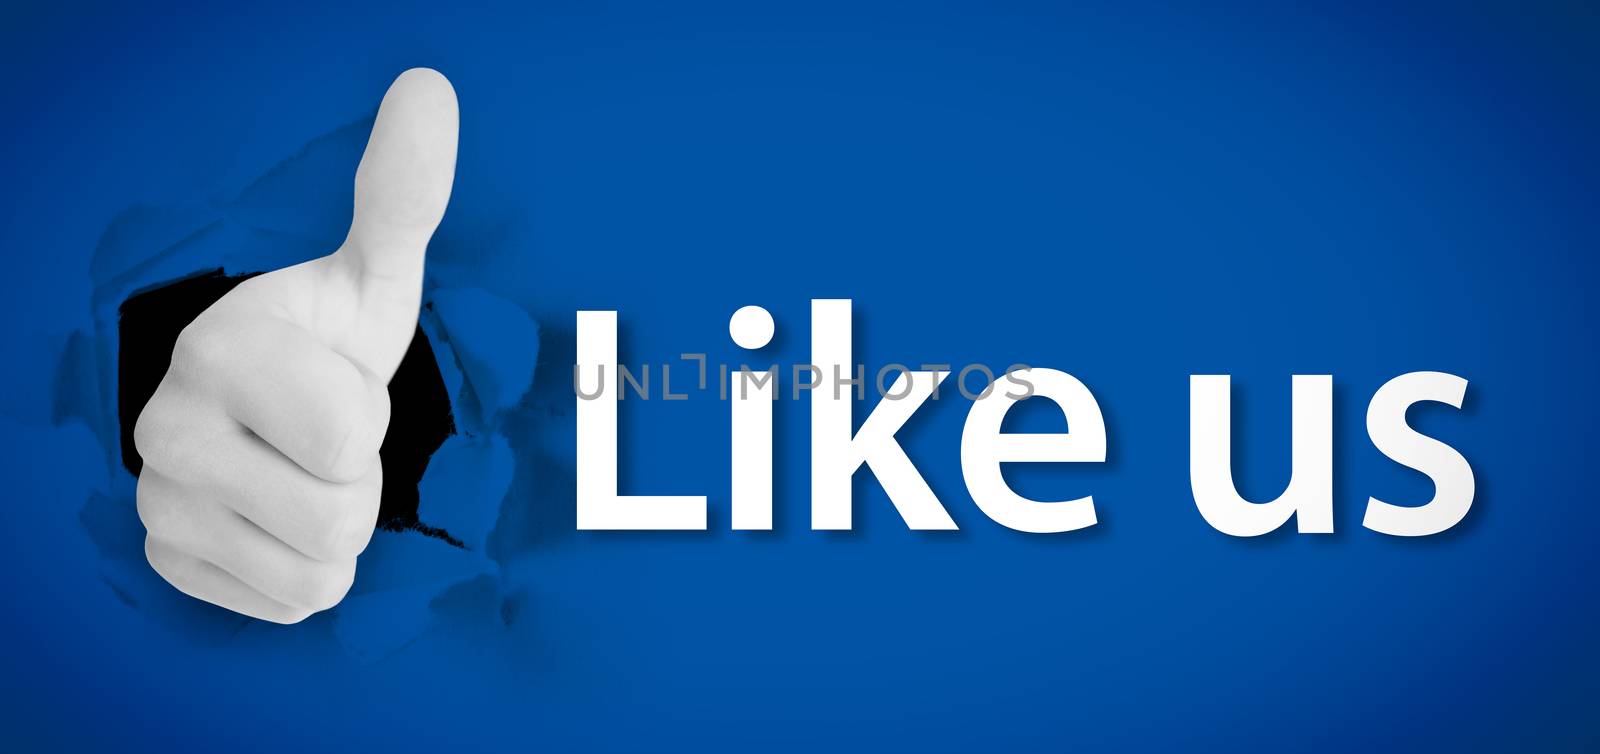 Social network logo showing thumb up by Wavebreakmedia